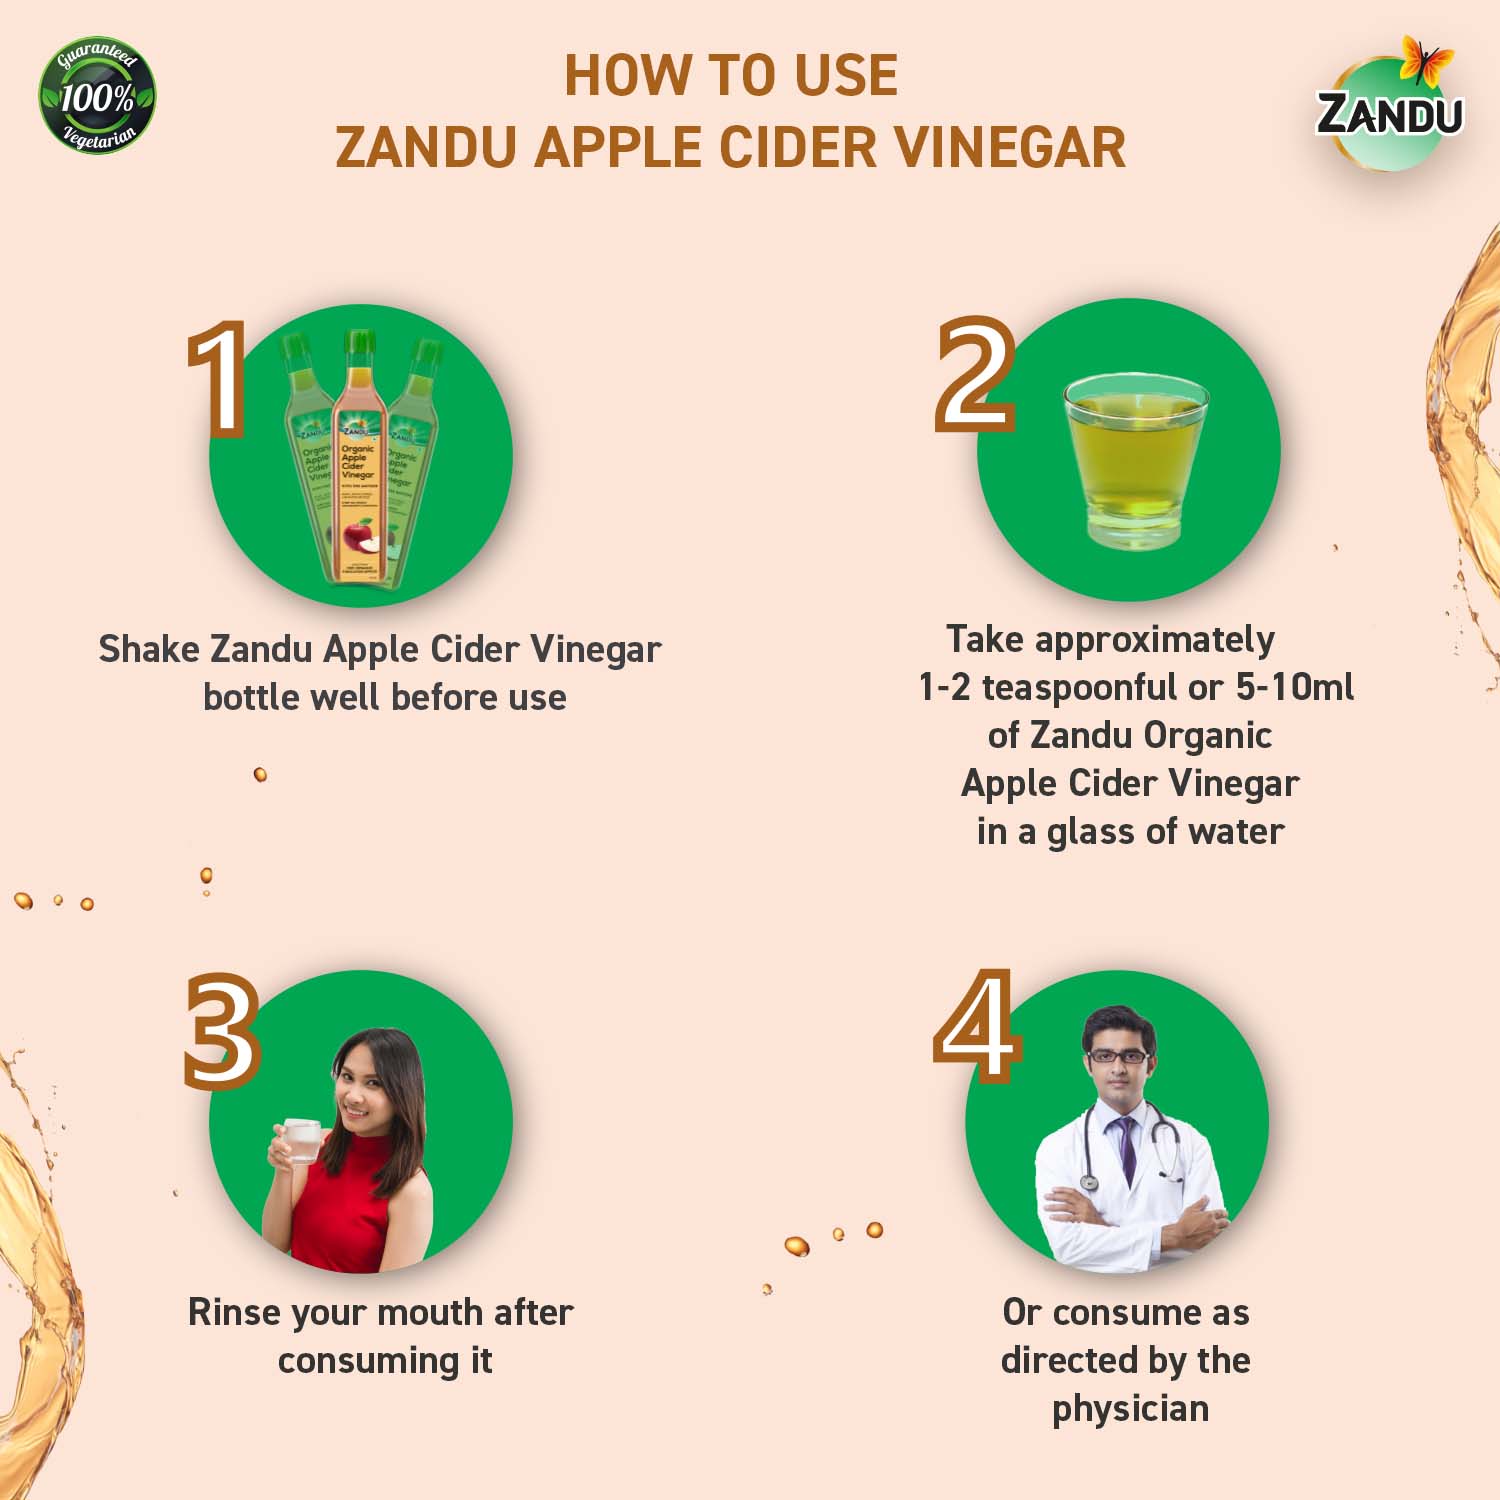 How to Consume Zandu Organic Apple Cider Vinegar